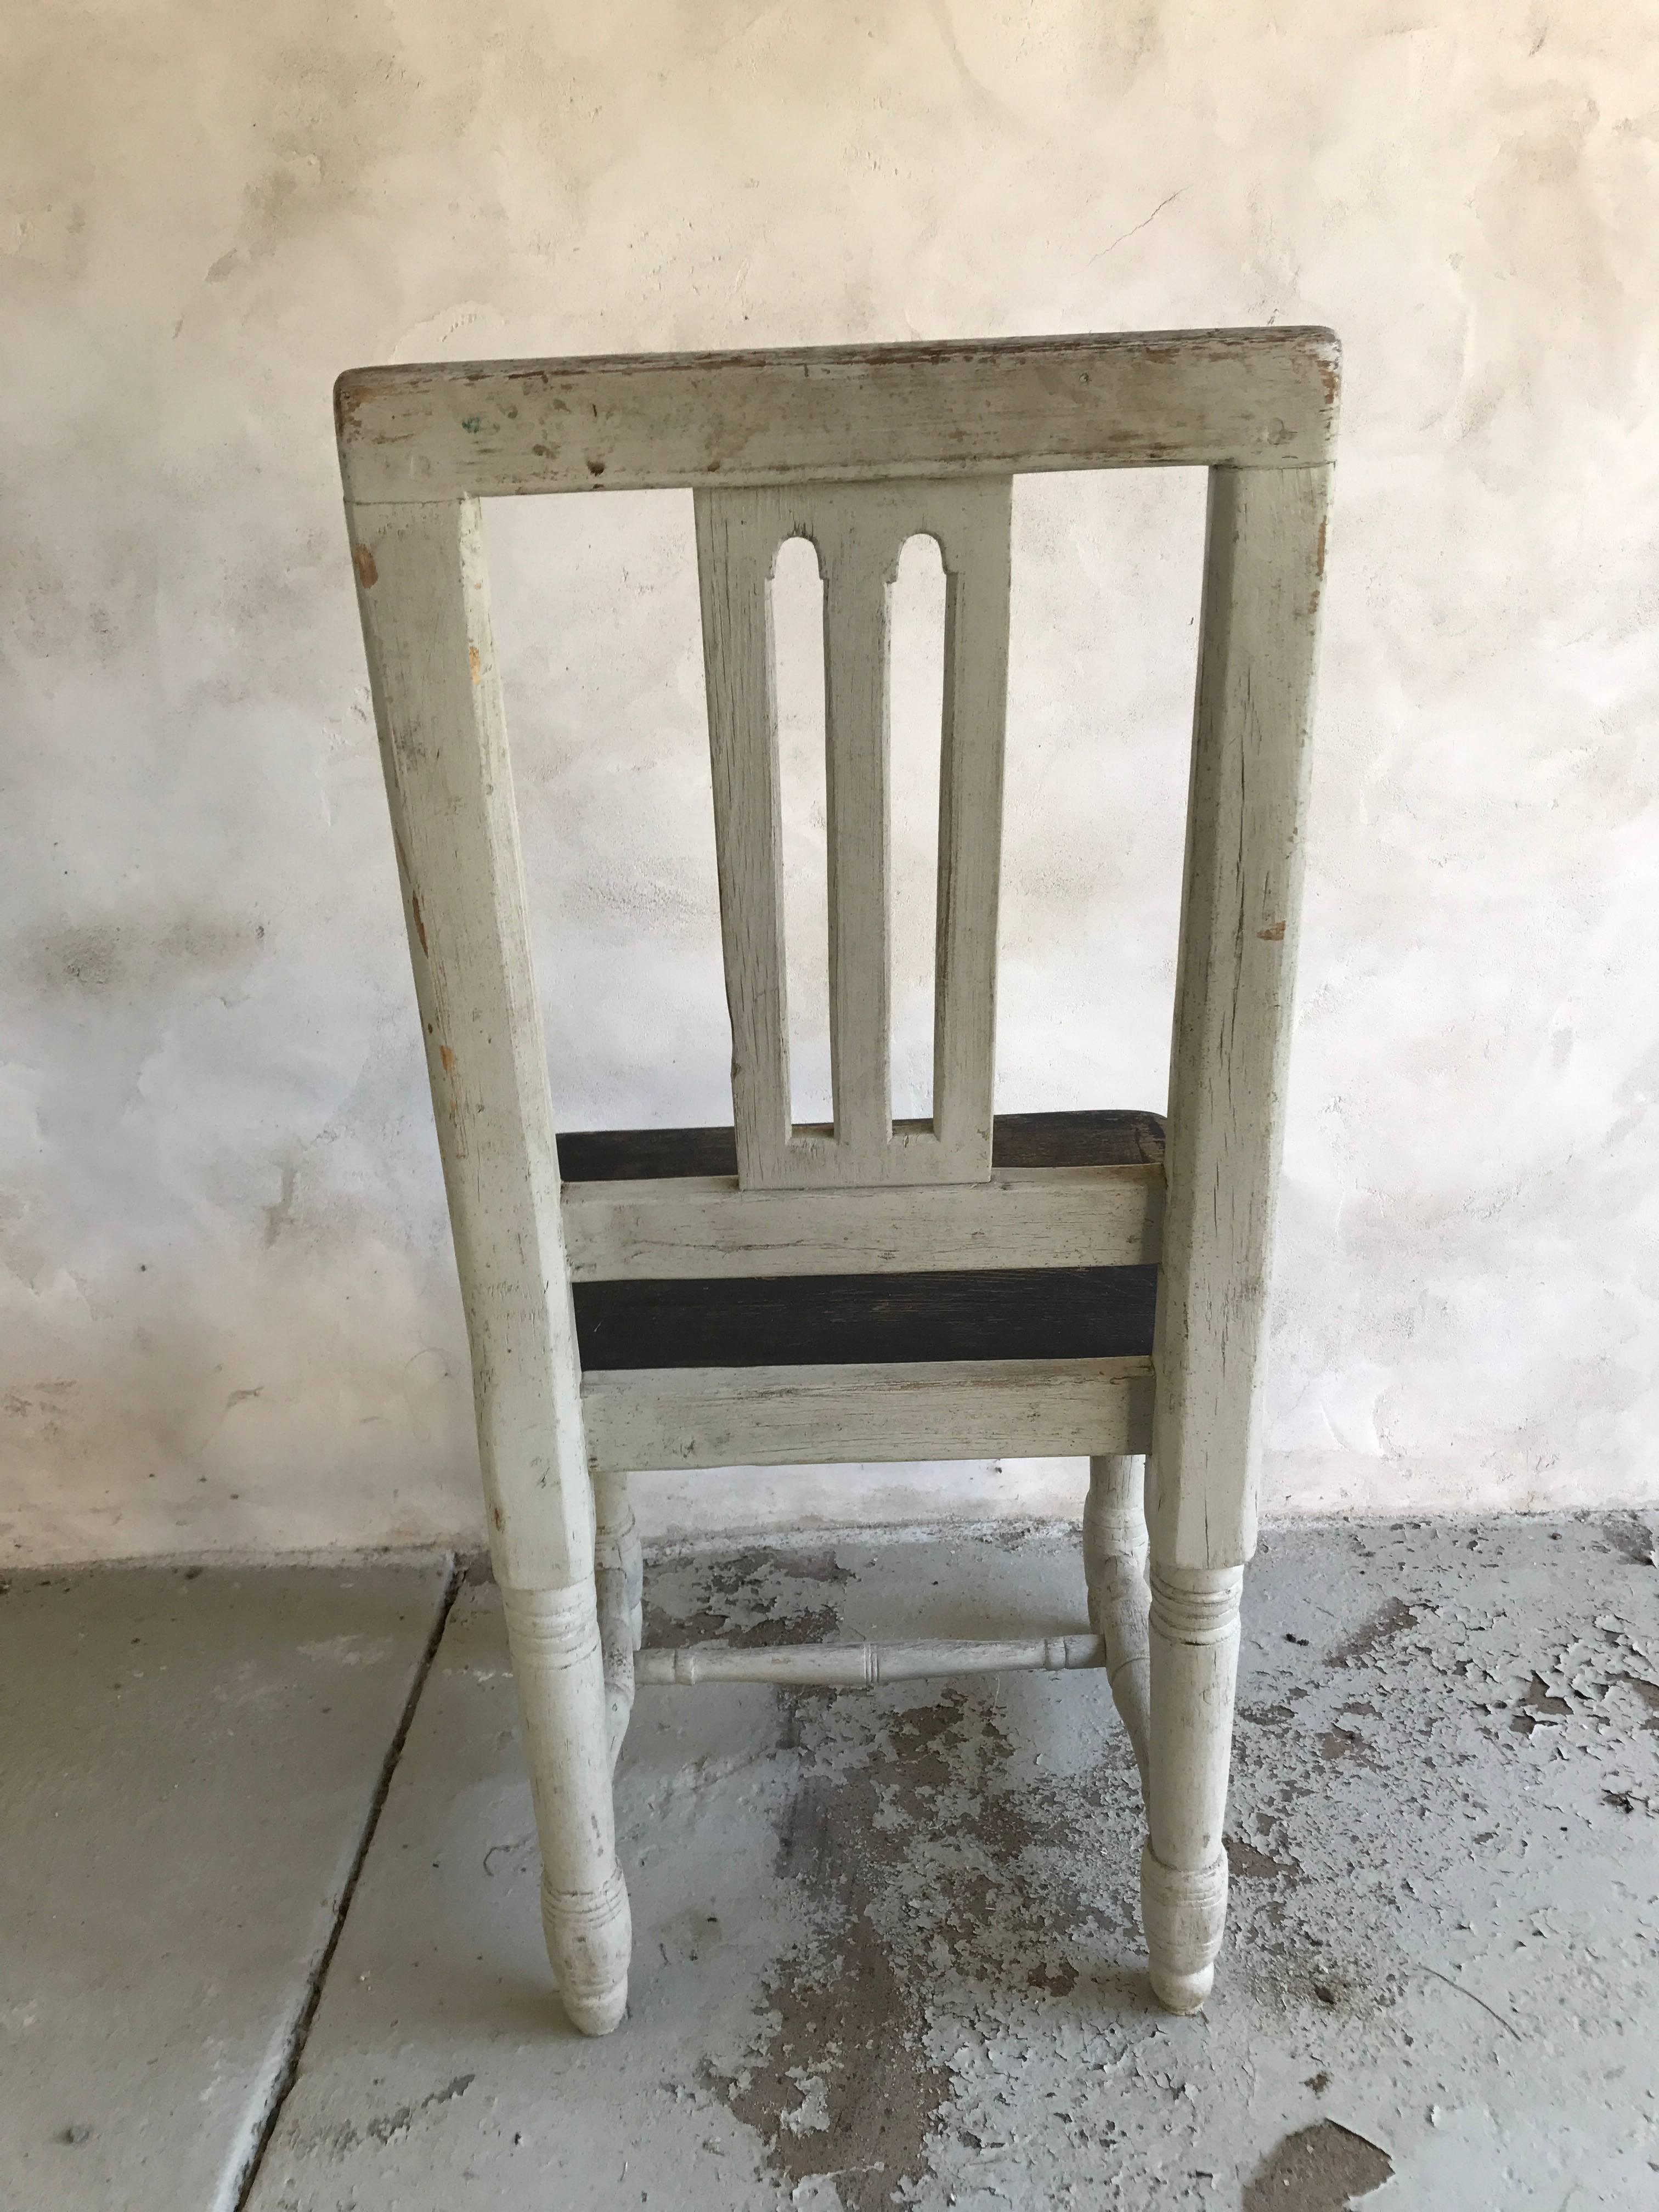 Three 19th Century Swedish Chairs In Distressed Condition In Stockton, NJ